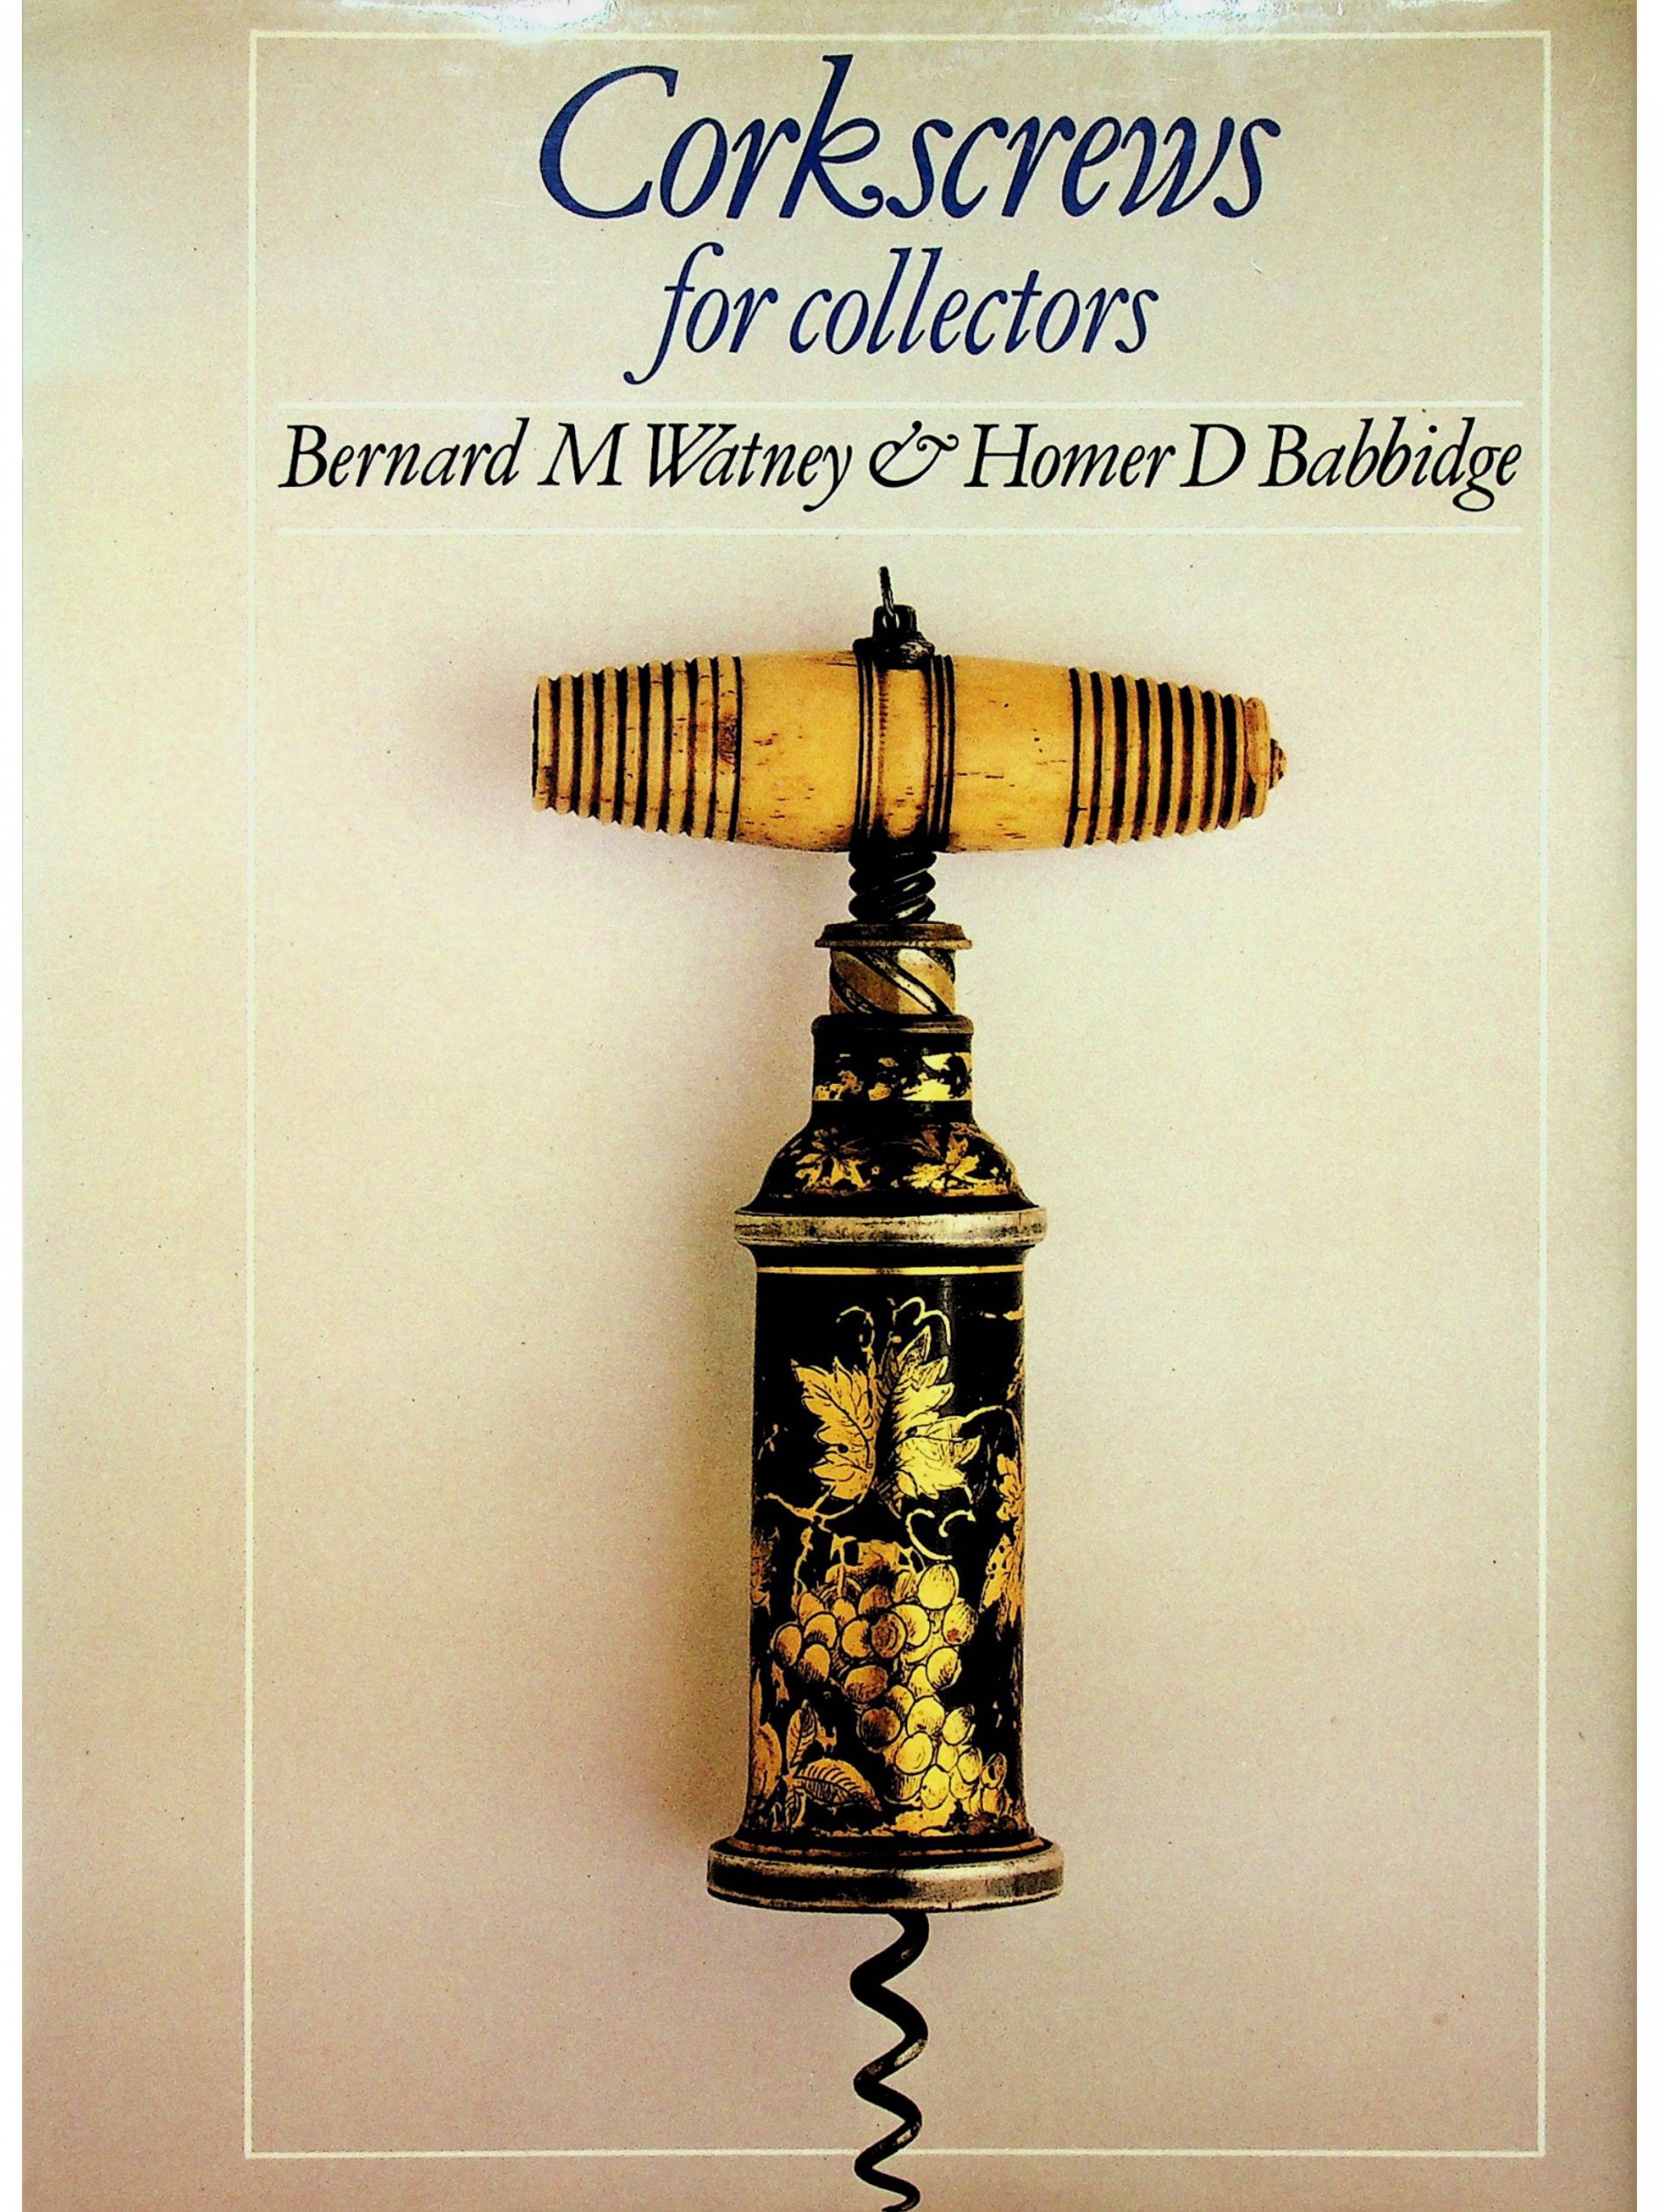 Corkscrews for collectors, B. M. Watney & H. D. Babbidge - Hammer